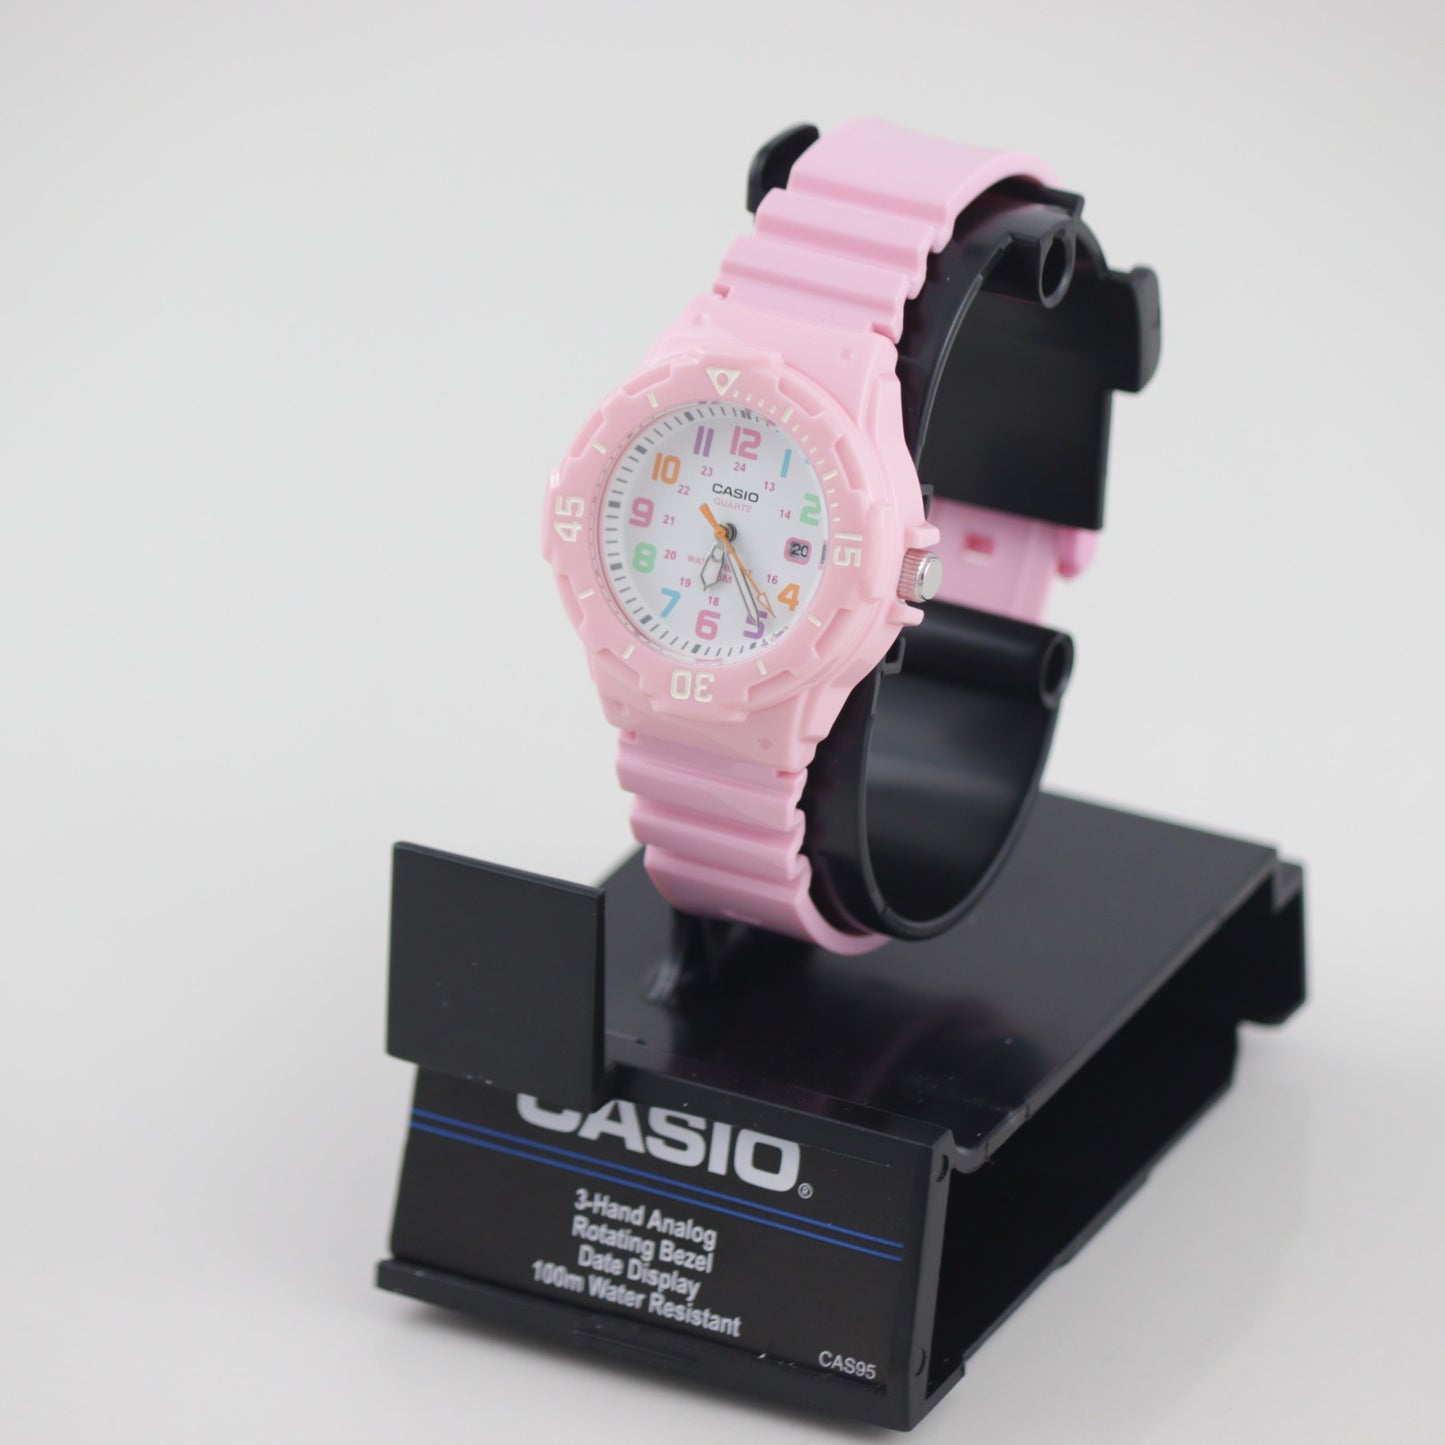 Casio Women's Dive Style Watch, Pink